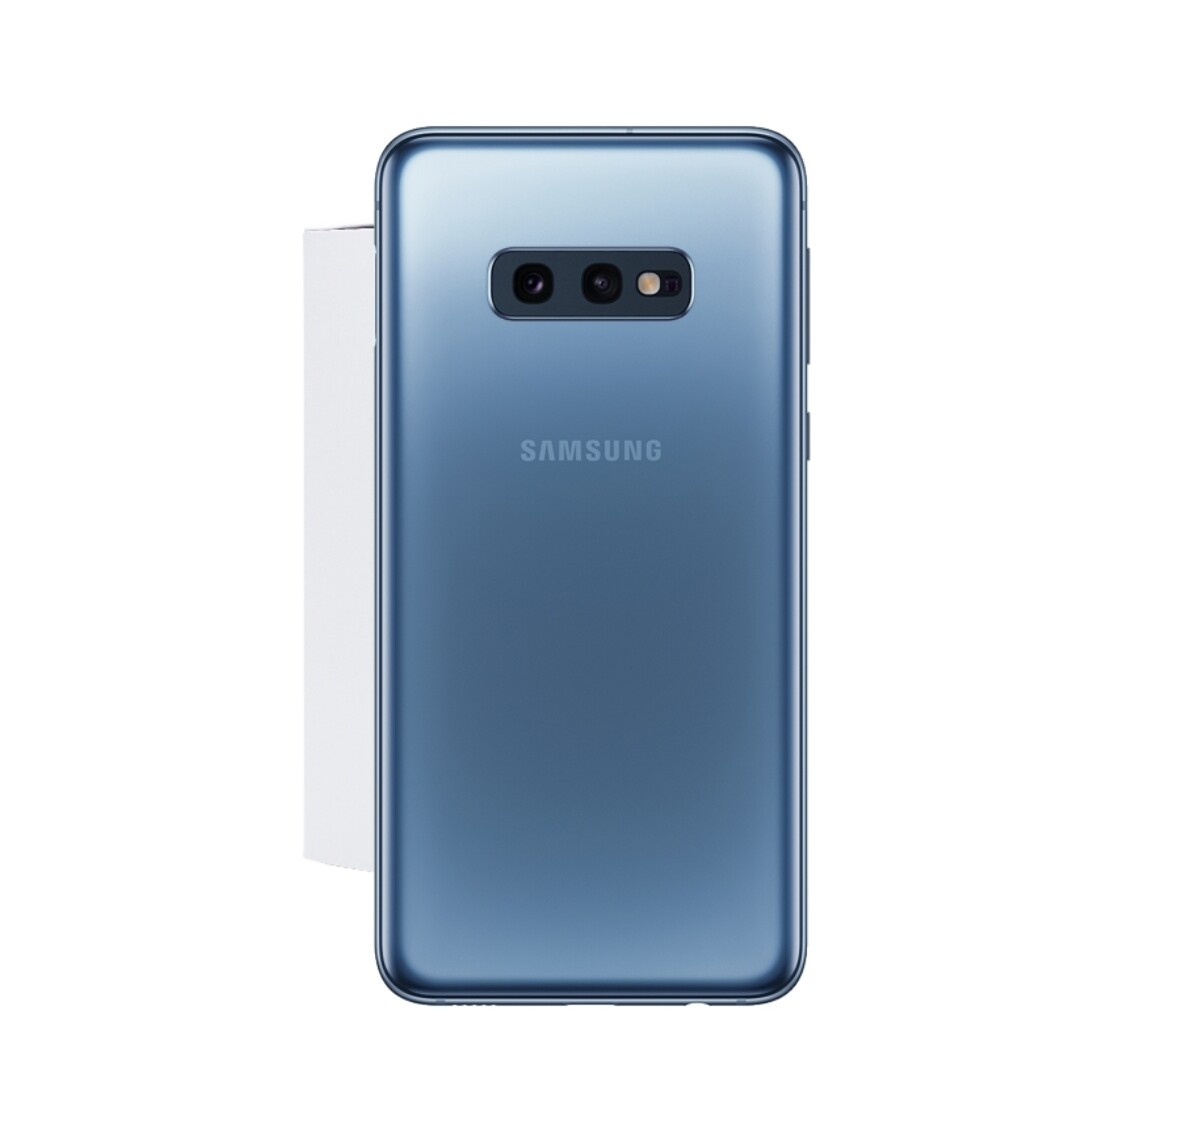 A Stock - Samsung Galaxy S10e - Unlocked